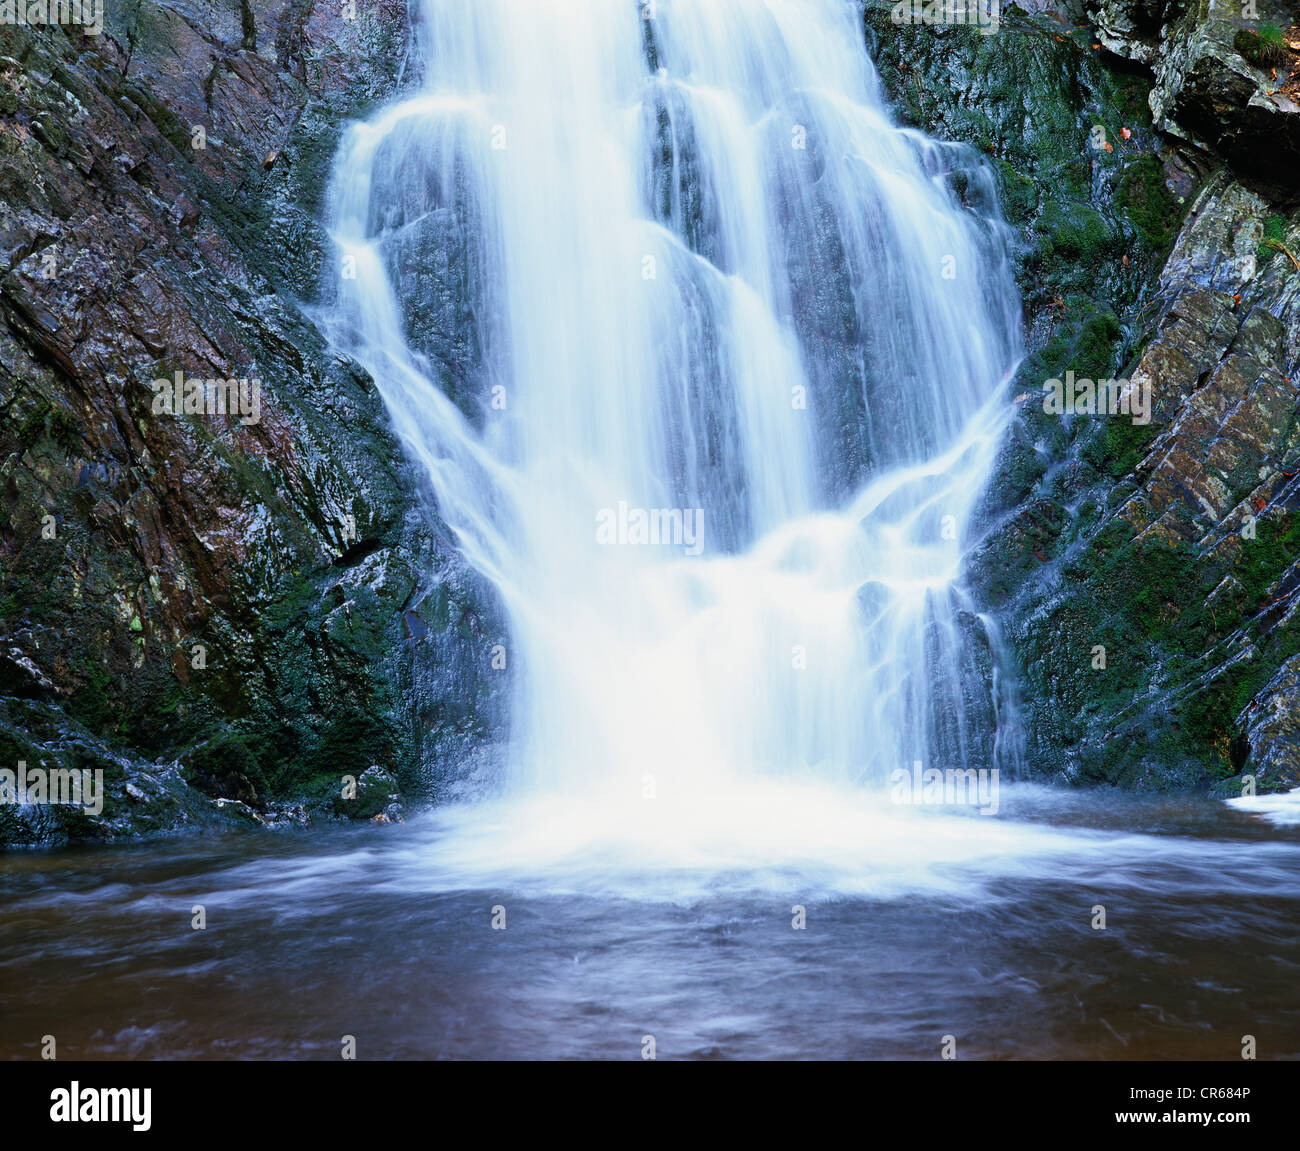 Agua, el arroyo que fluye sobre las rocas en una cuenca natural, Parque Natural de Eifel, Hohes Venn, Bélgica, Europa Foto de stock